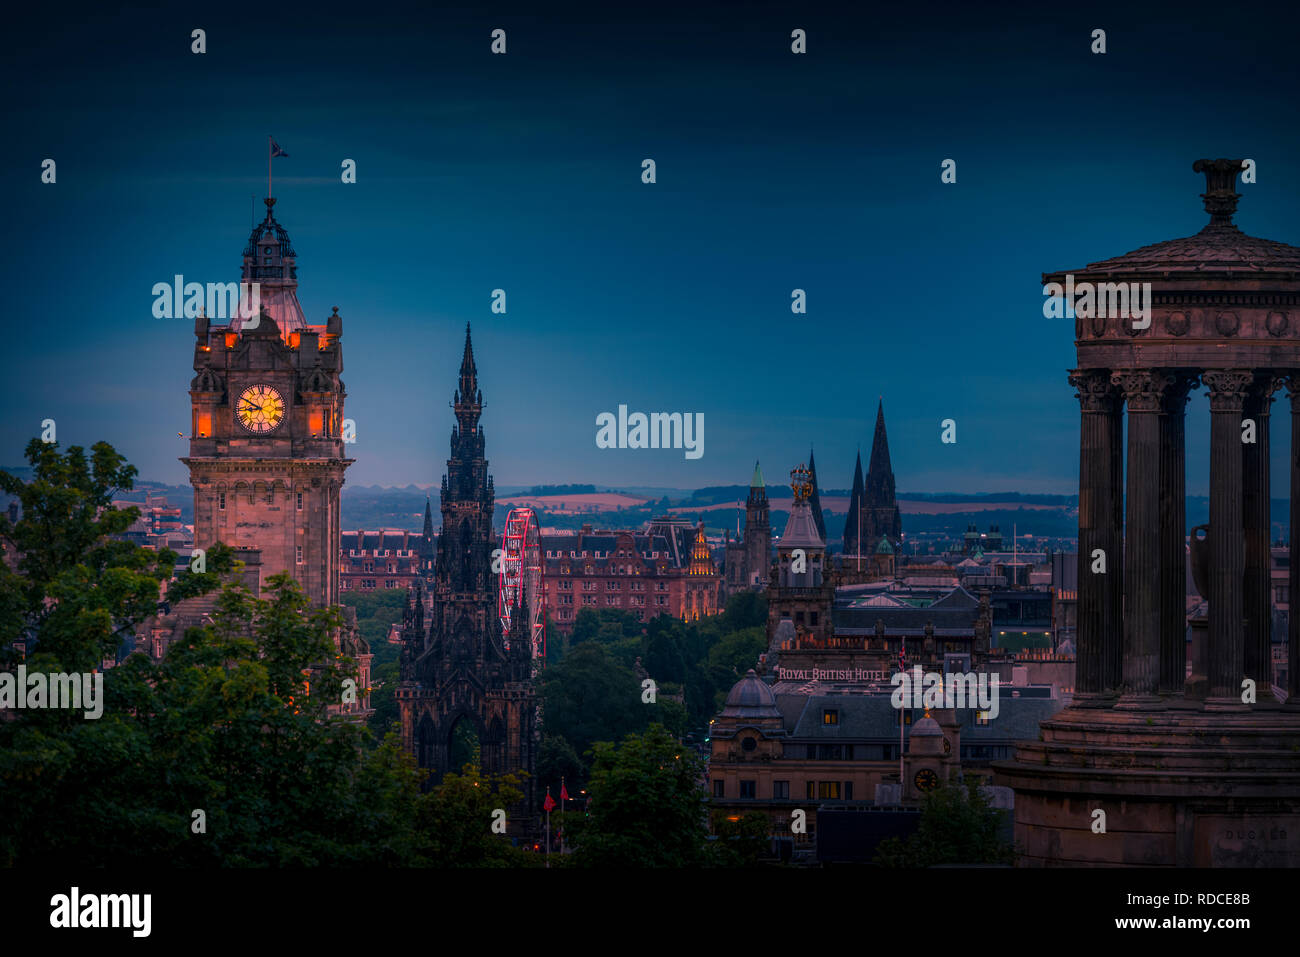 Europa, Großbritannien, Schottland, Edimburgo, Aussichtspunkt, Calton Hill, el Hotel Balmoral, Turm Foto de stock